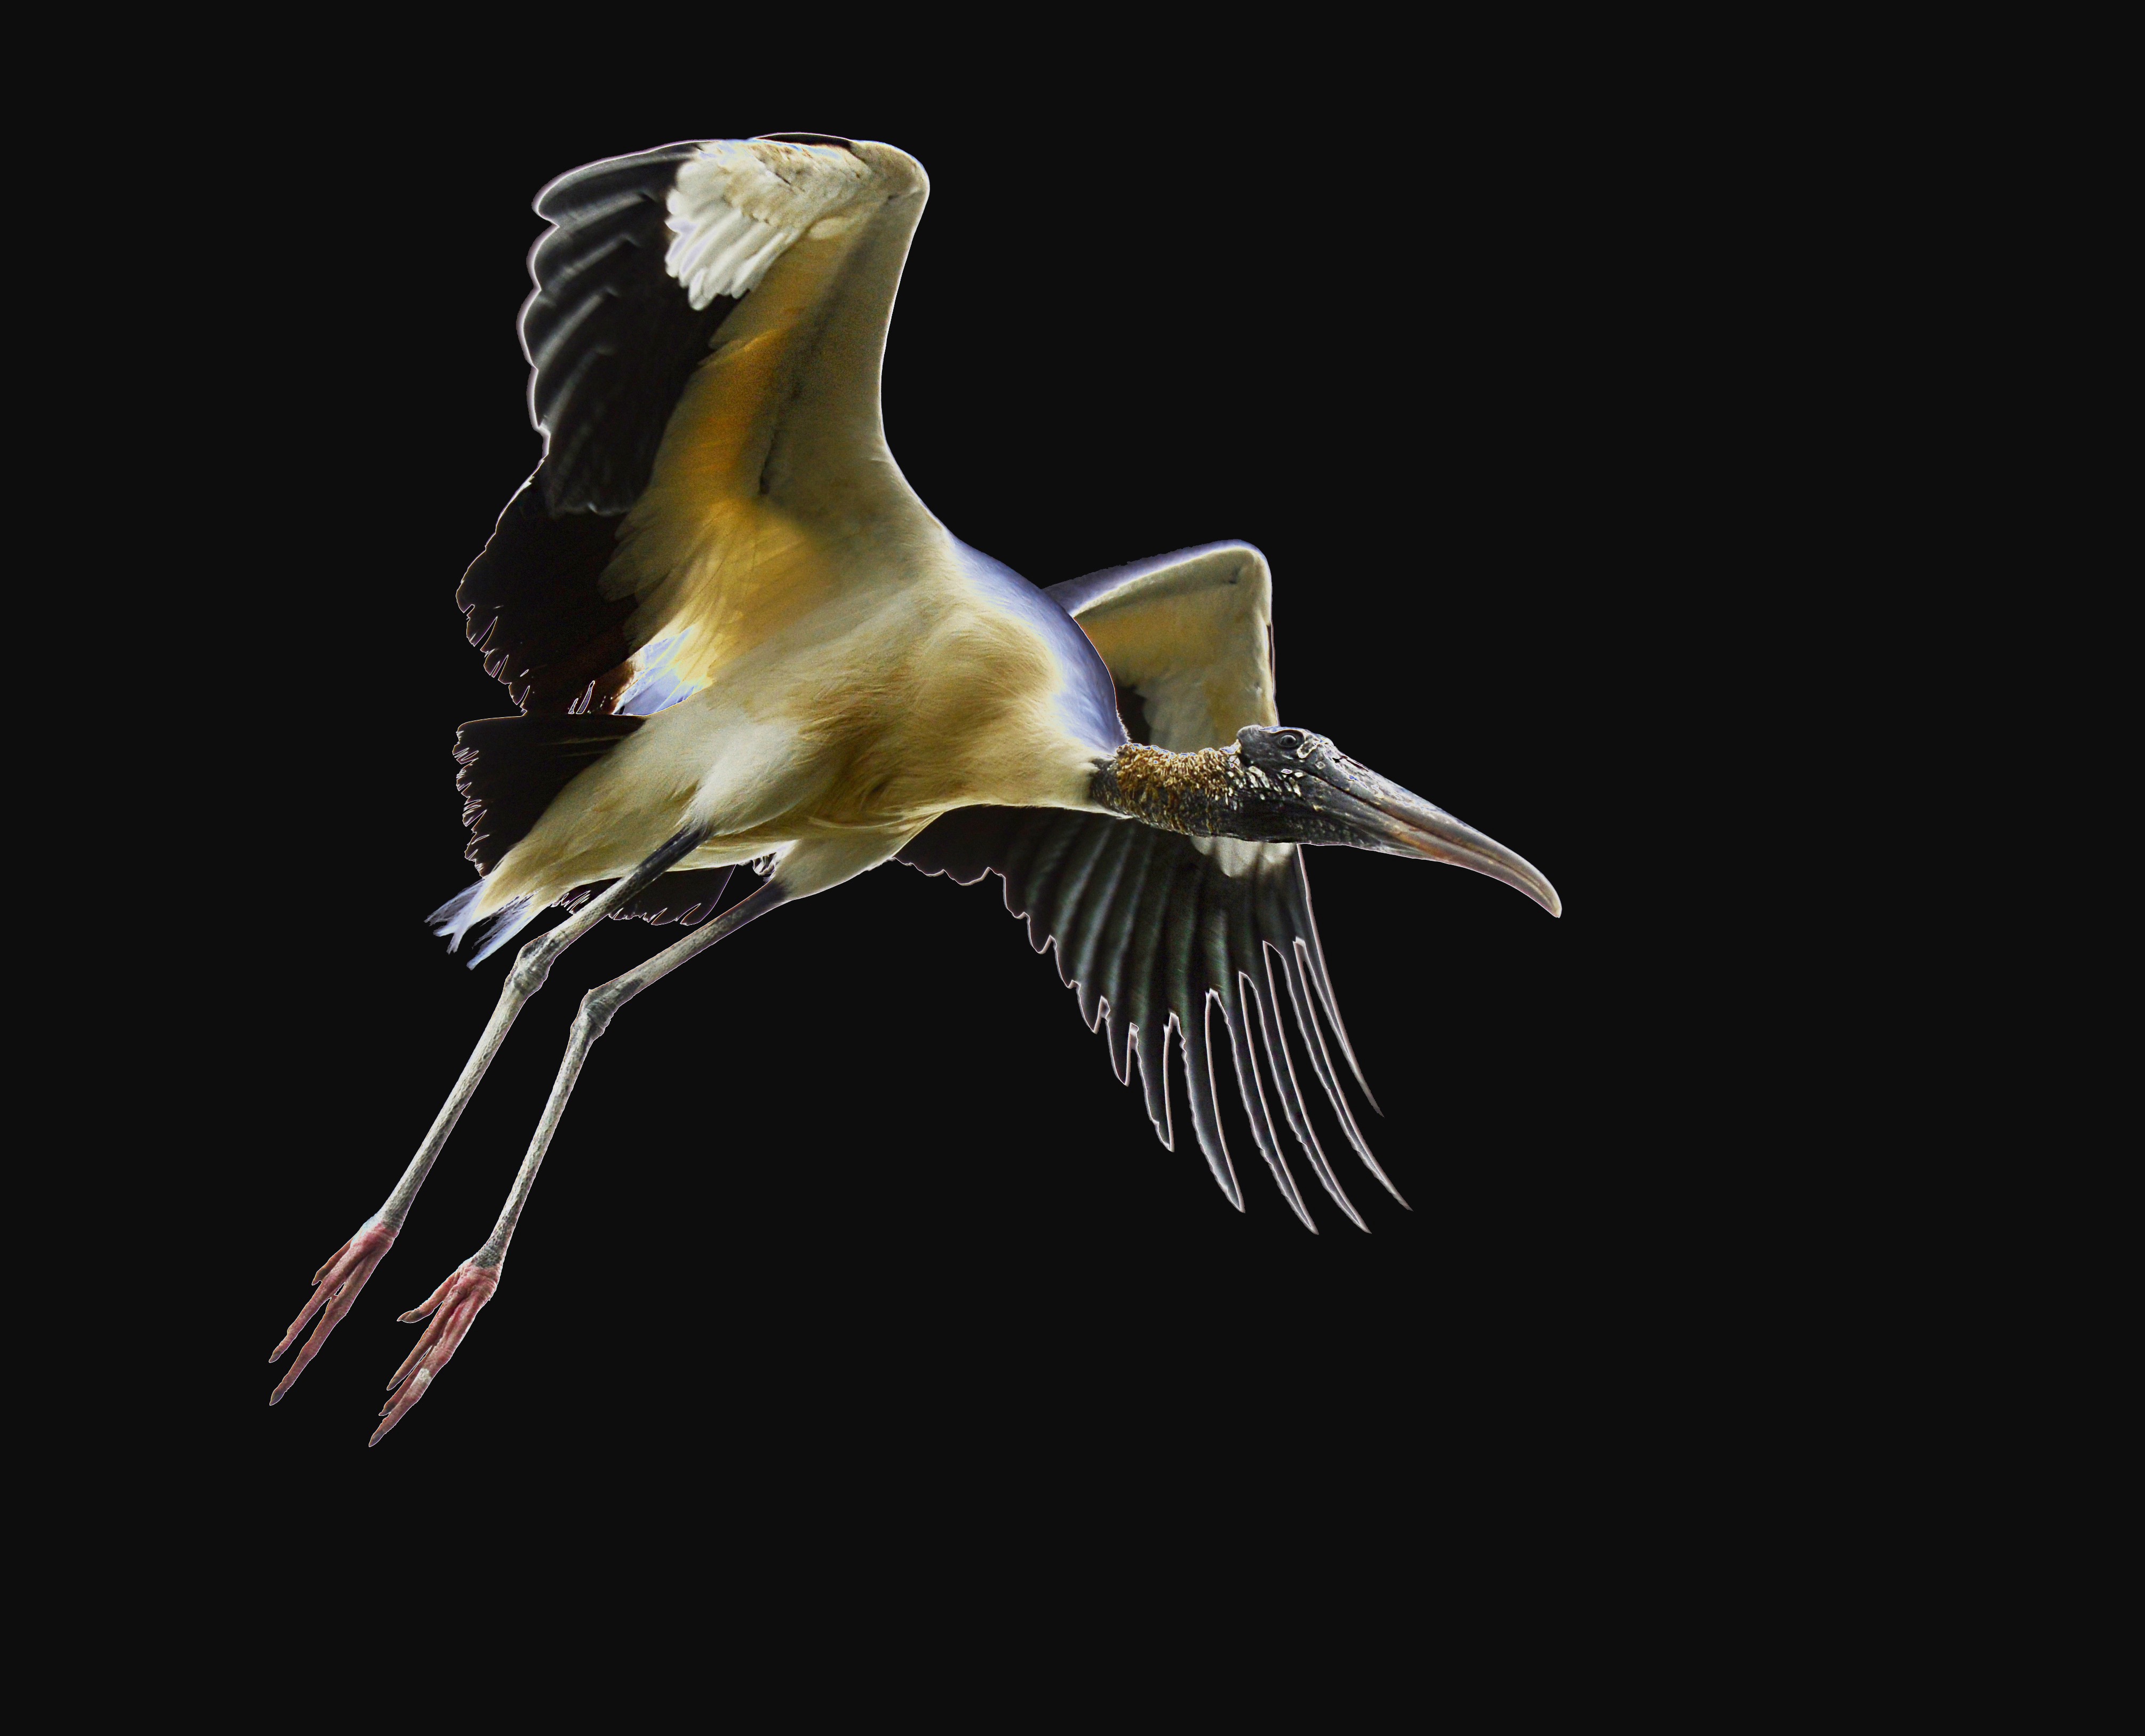 Night Flight of a Wood Stork by Tom Buckard